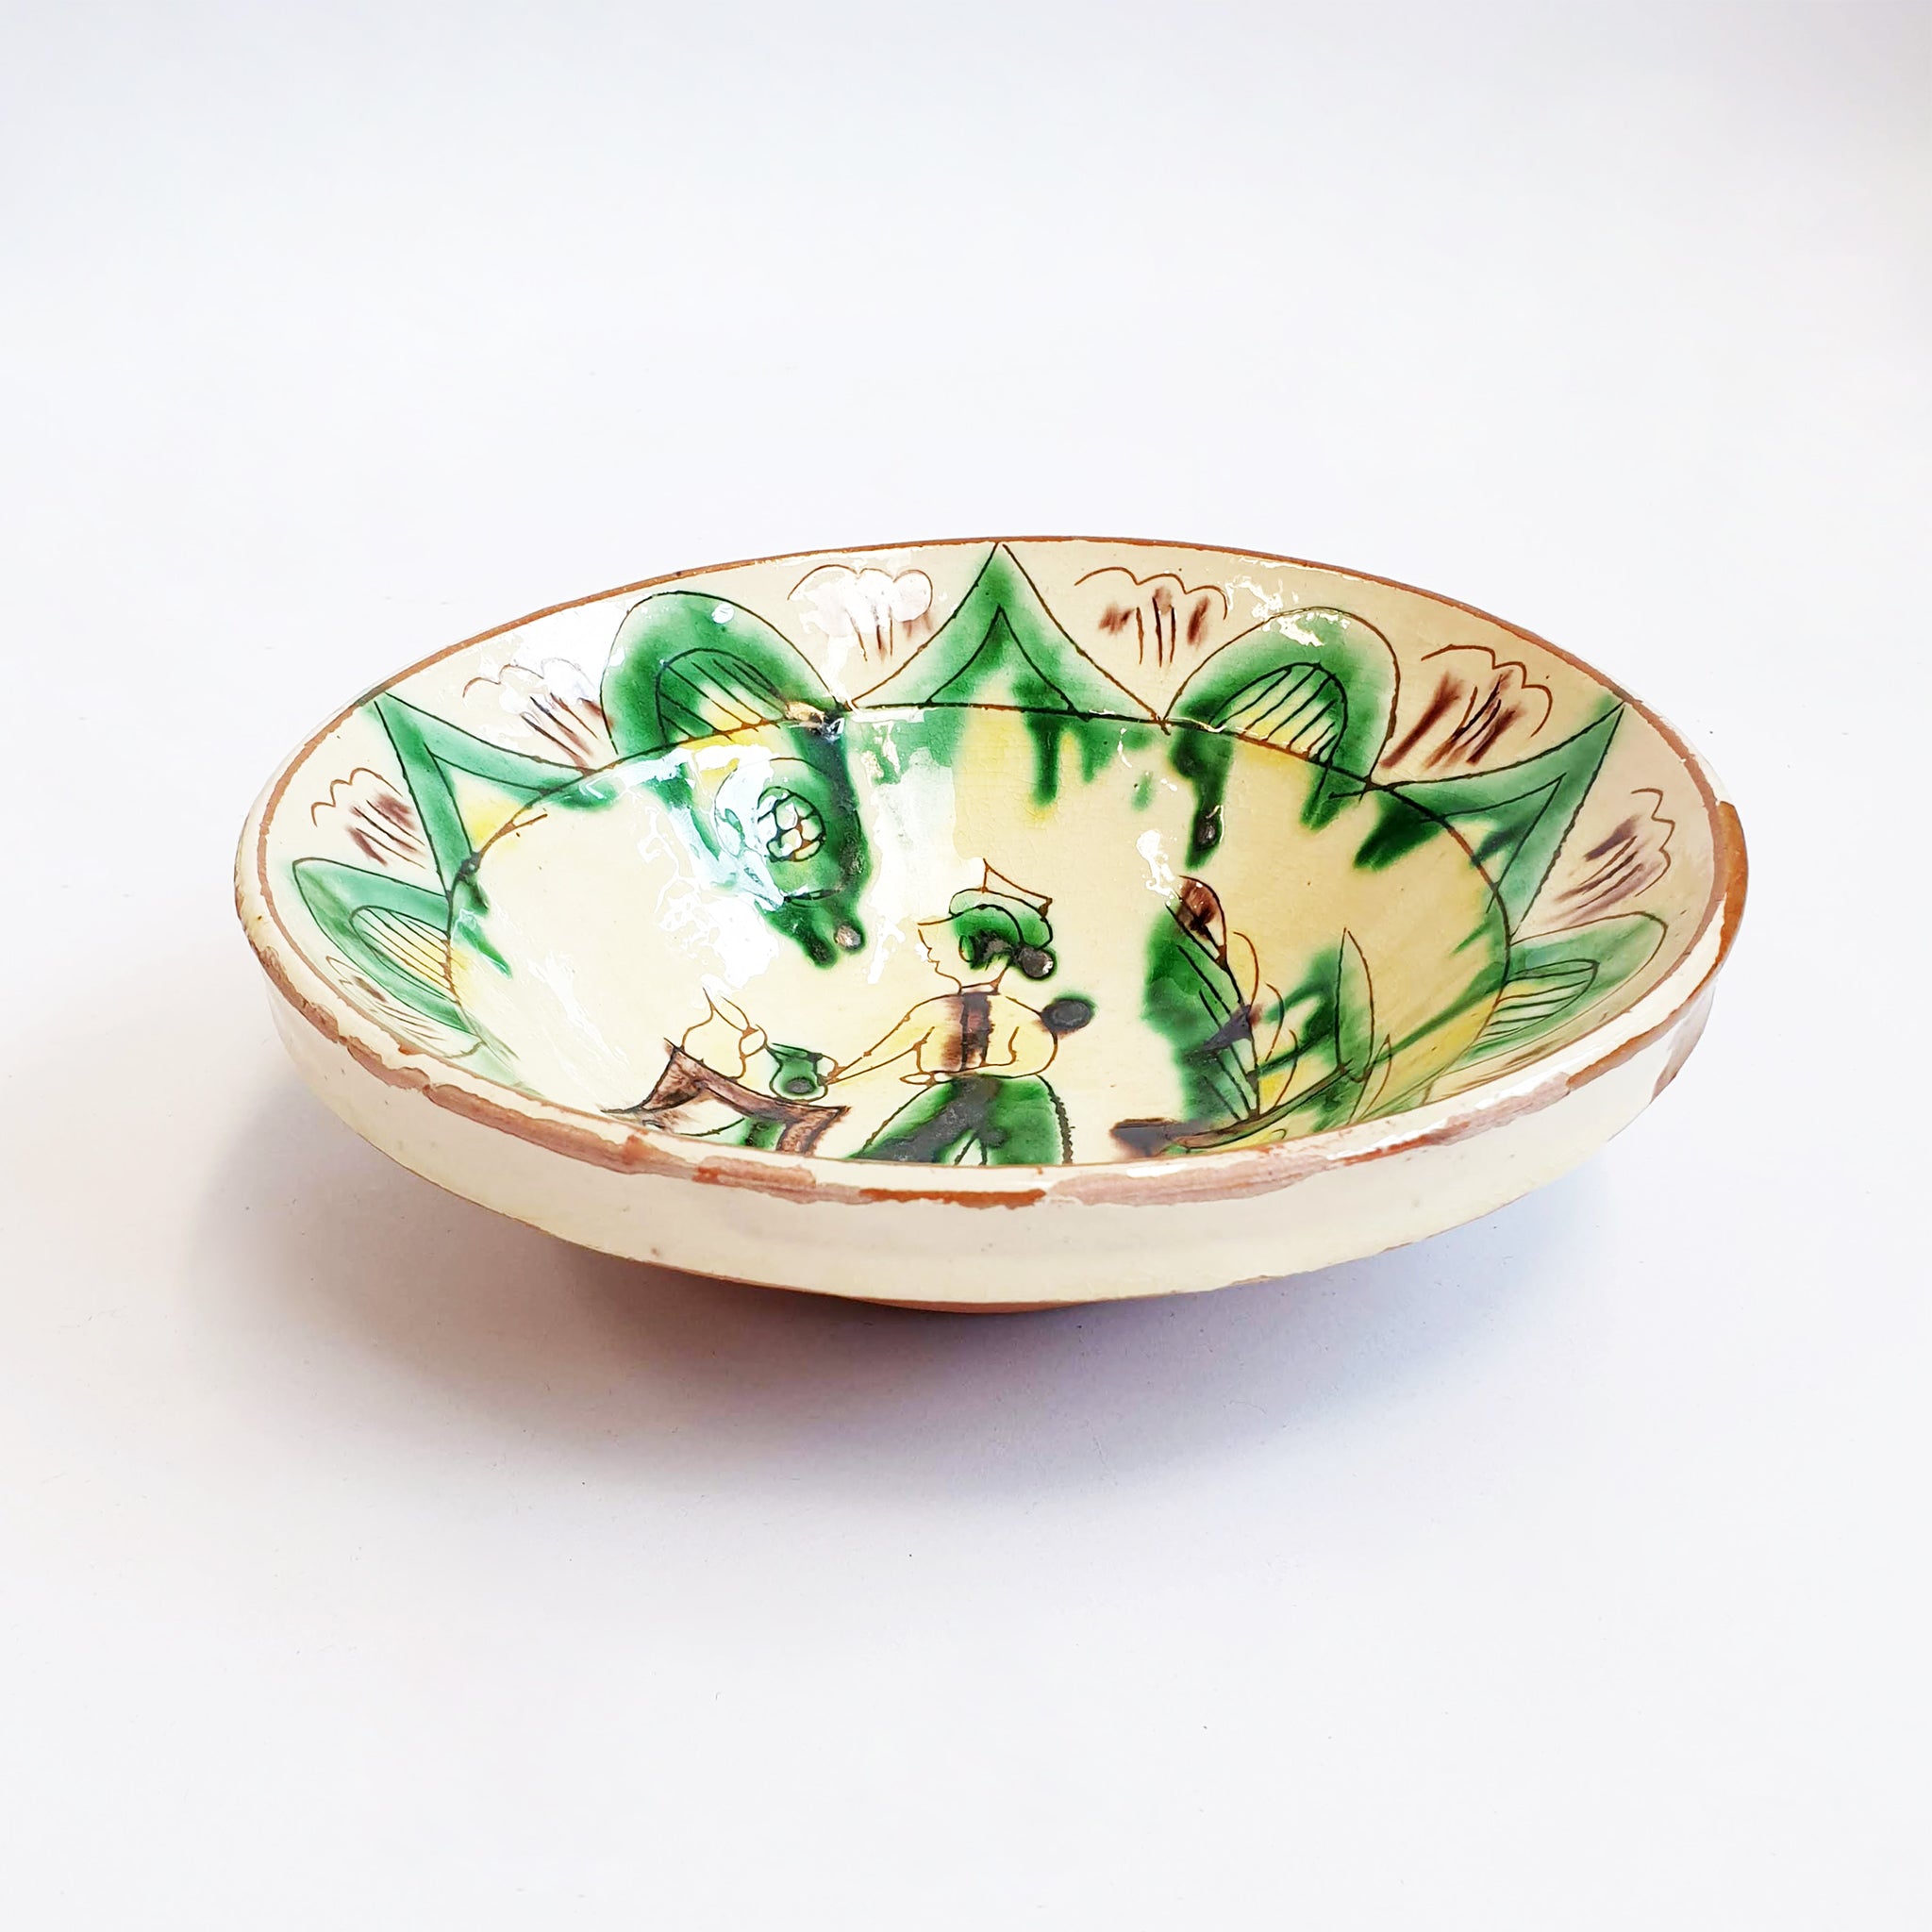 Vintage folk art bowl